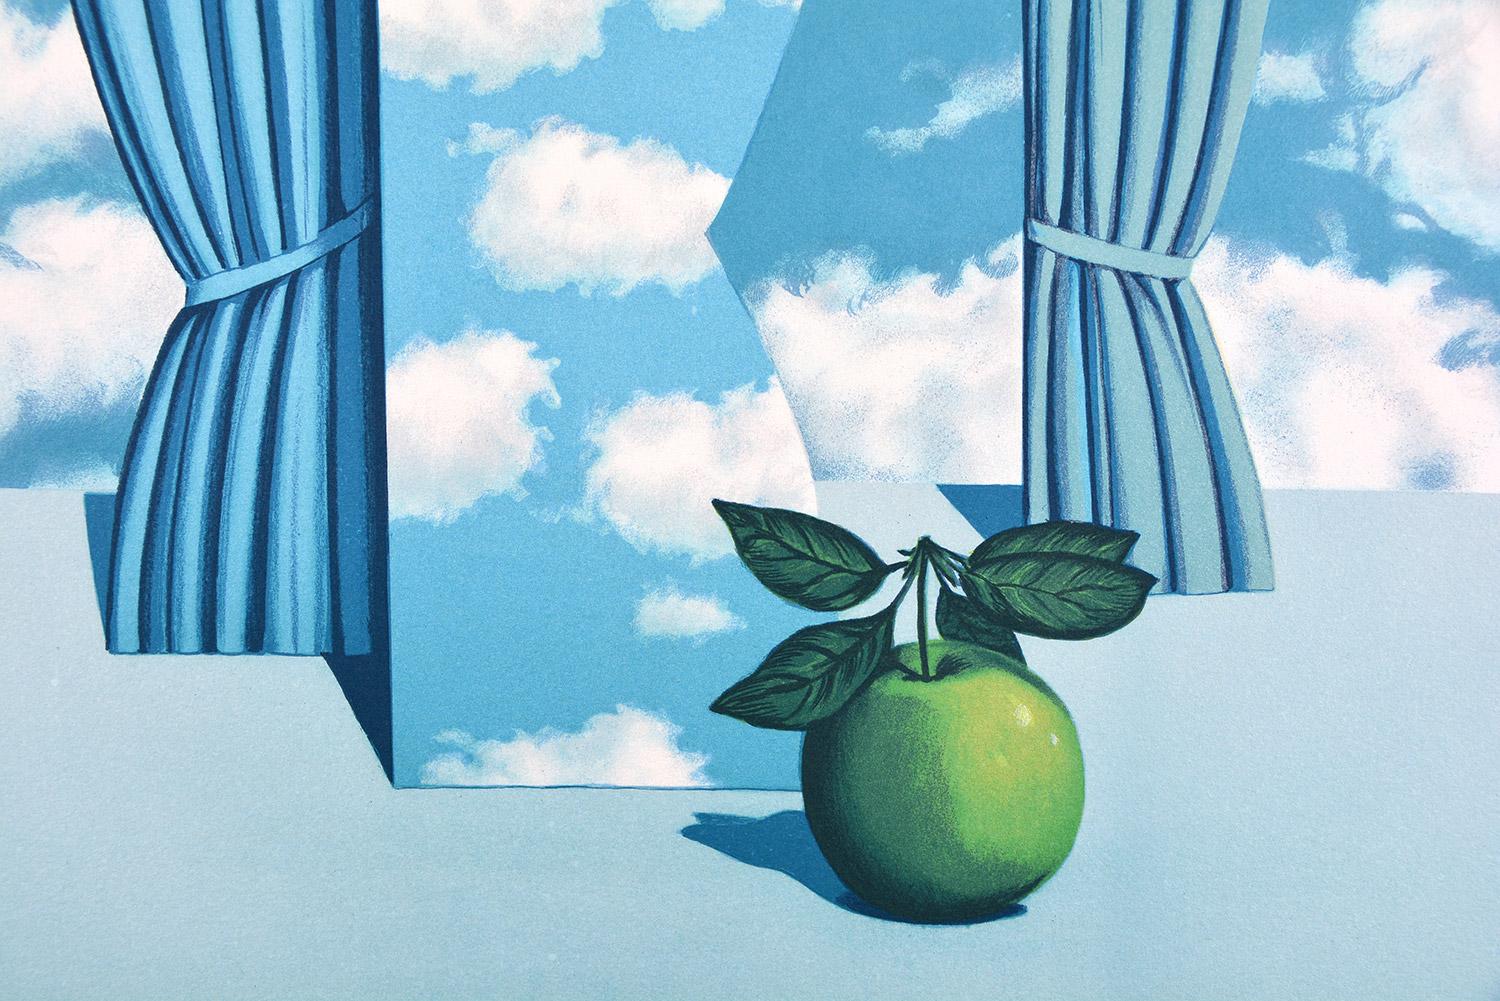 René Magritte - LE BEAU MONDE- Limited Lithograph Surrealism French Contemporary - Surrealist Print by (after) René Magritte